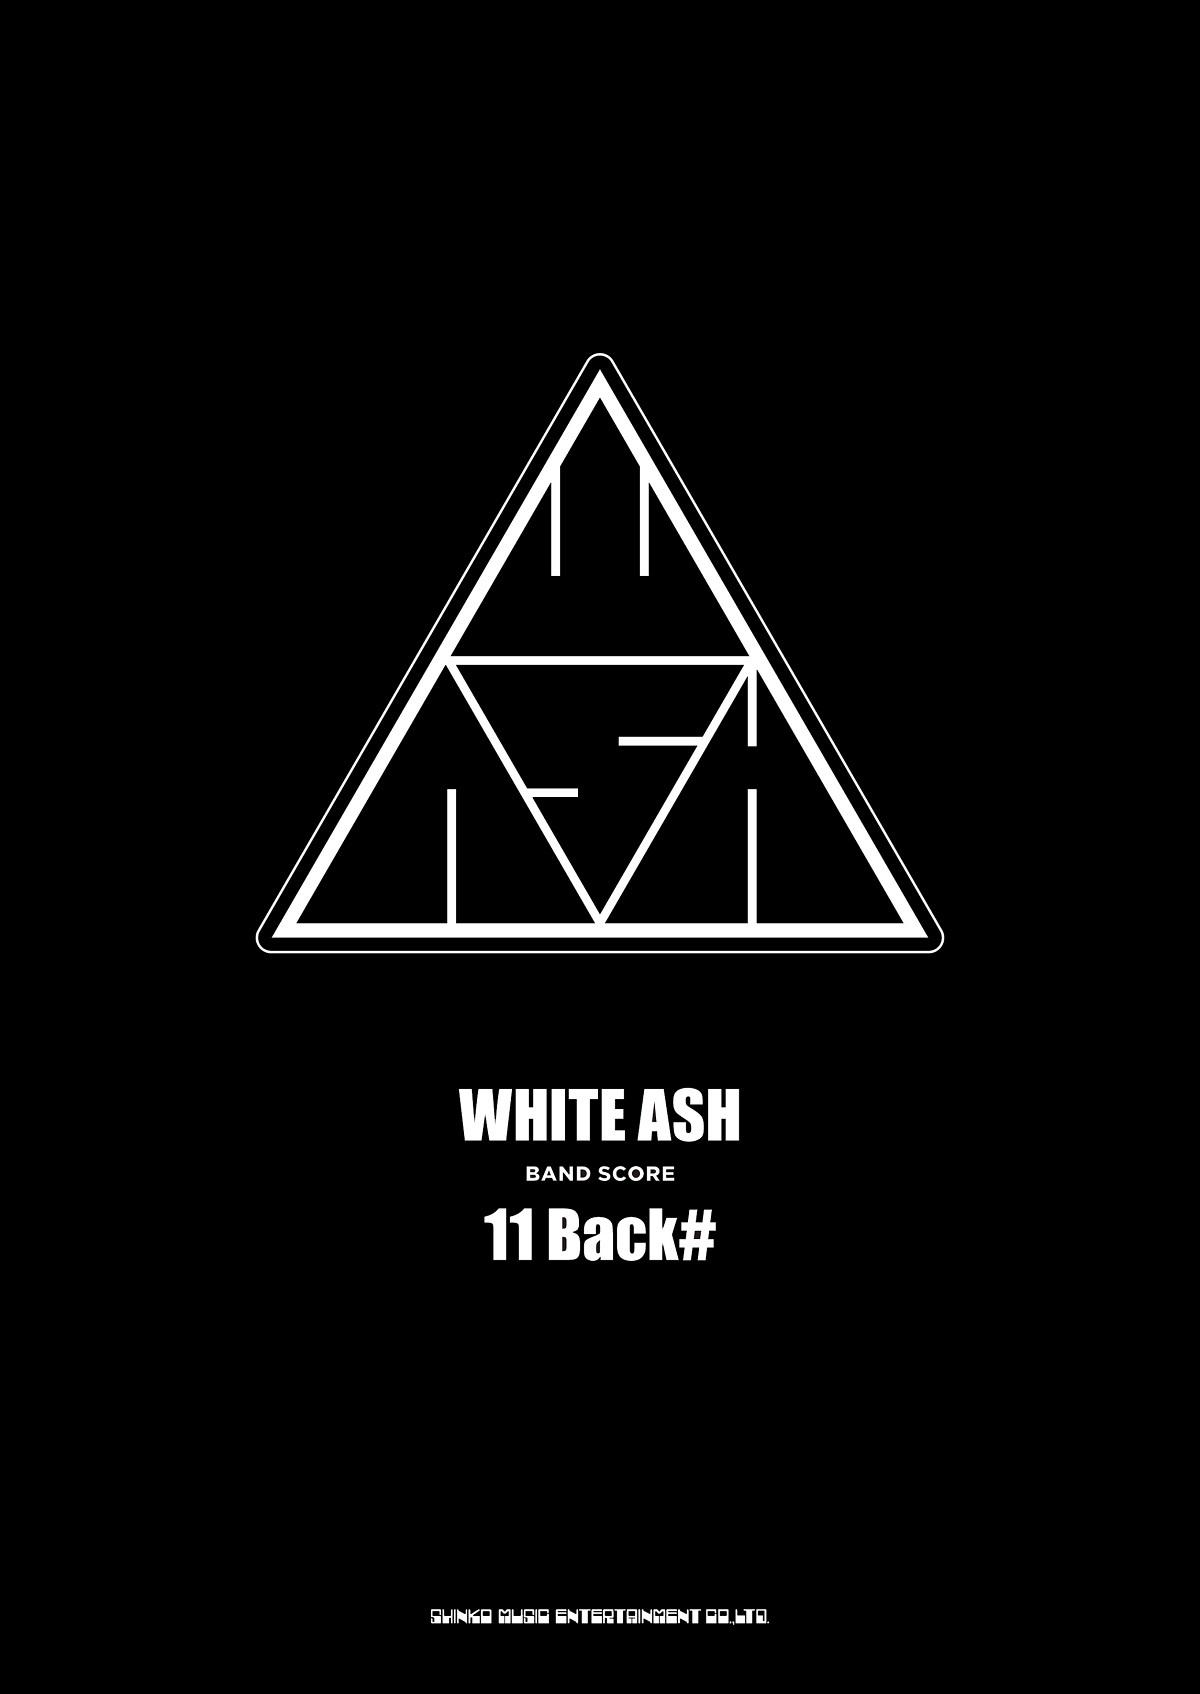 WHITE ASH BAND SCORE「11 Back#」